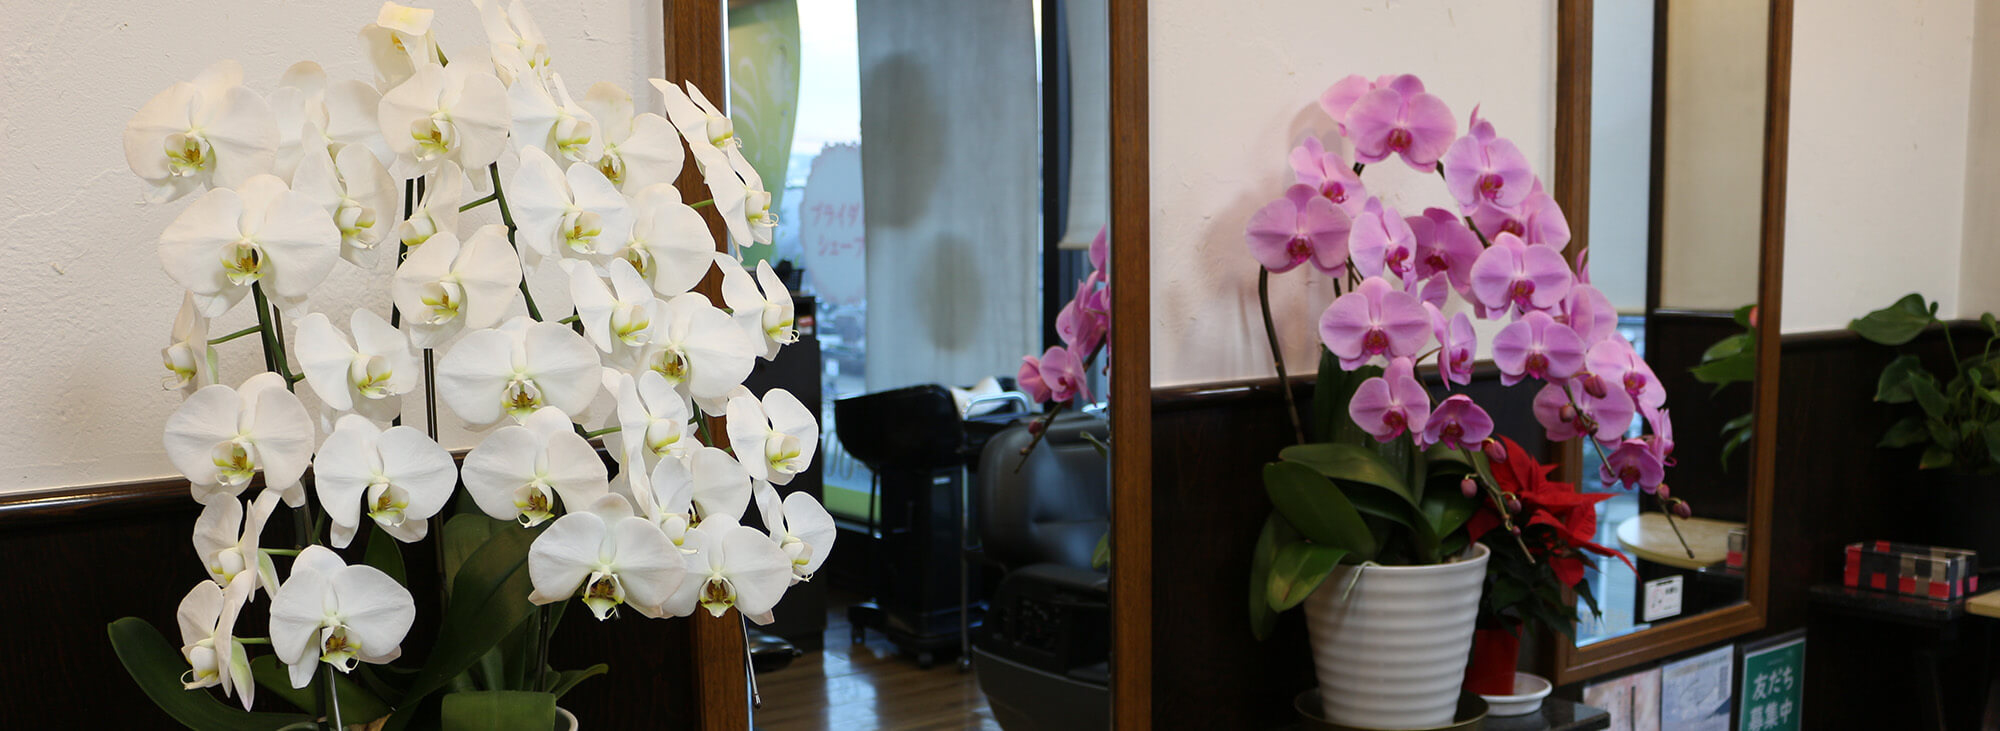 3F施術場の蘭の花と鏡